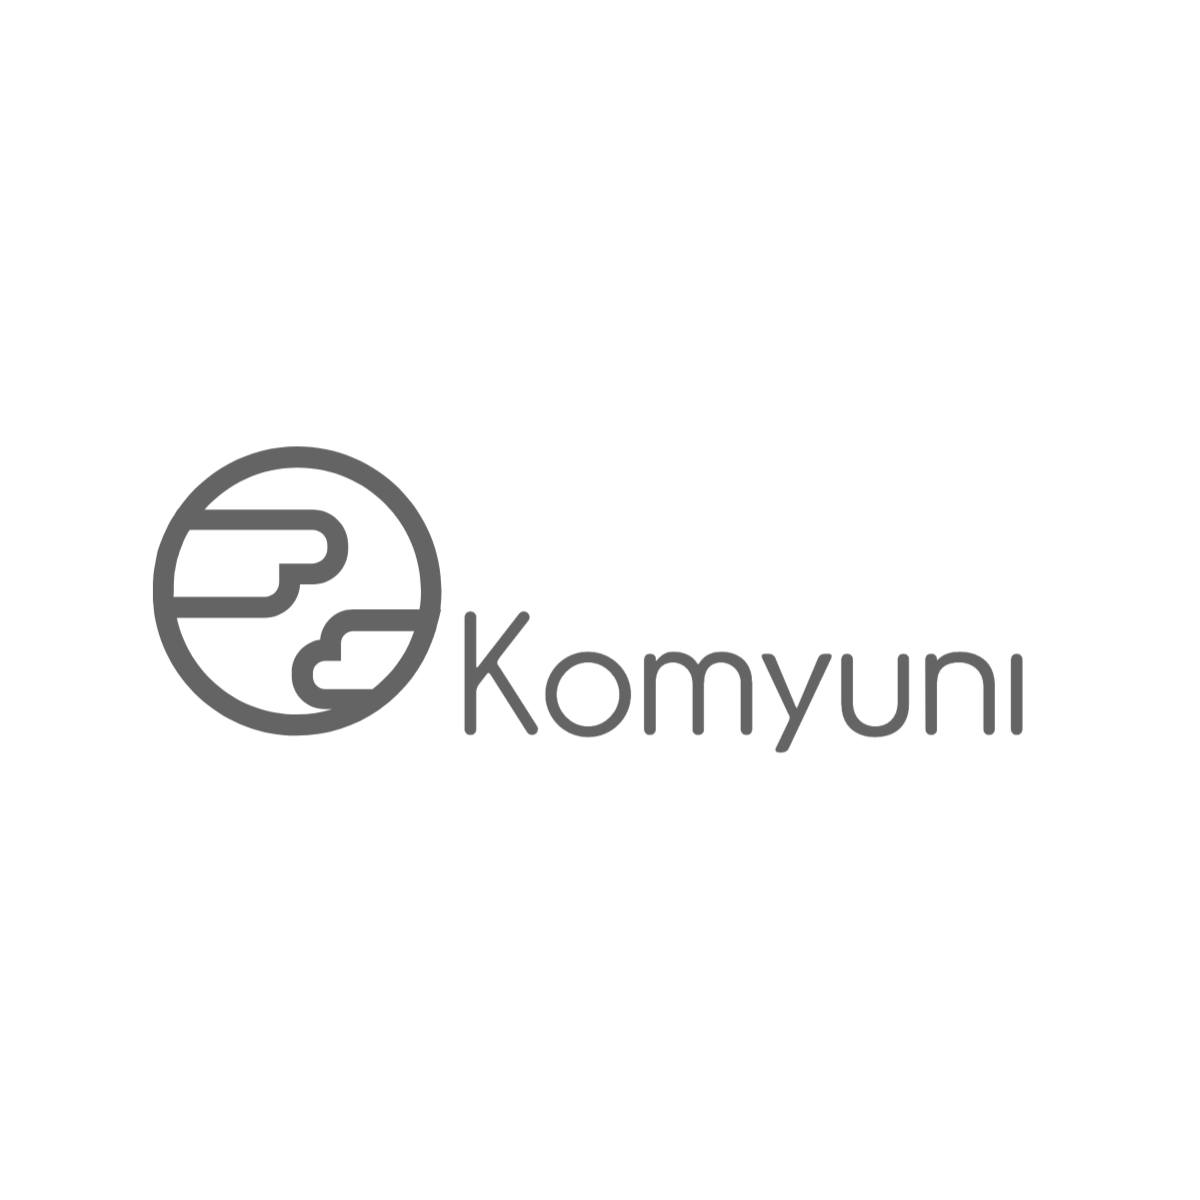 Komyuni Agency